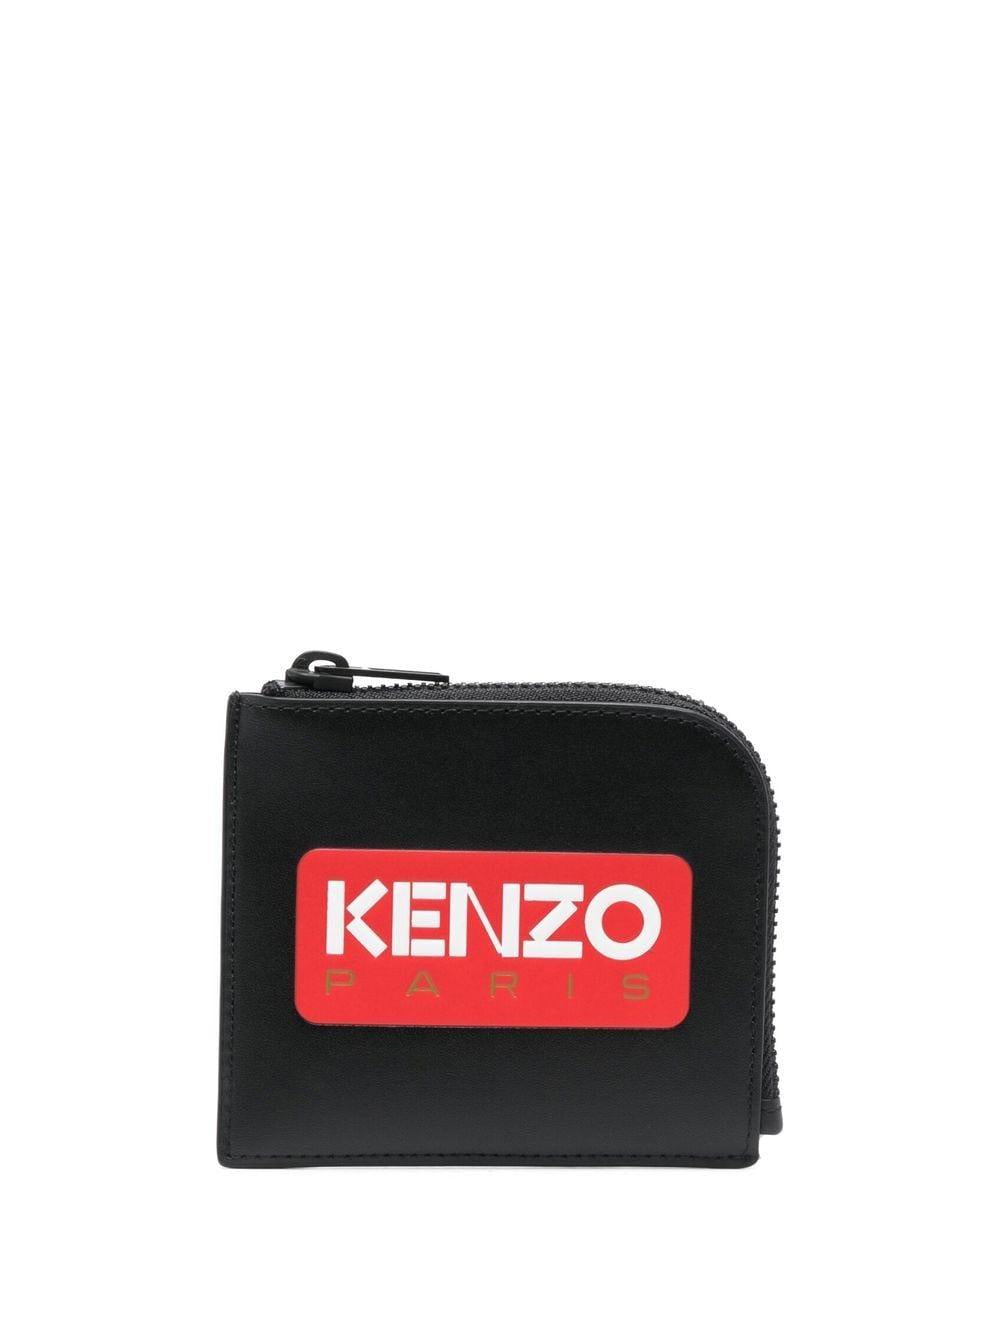 KENZO calf leather coin purse